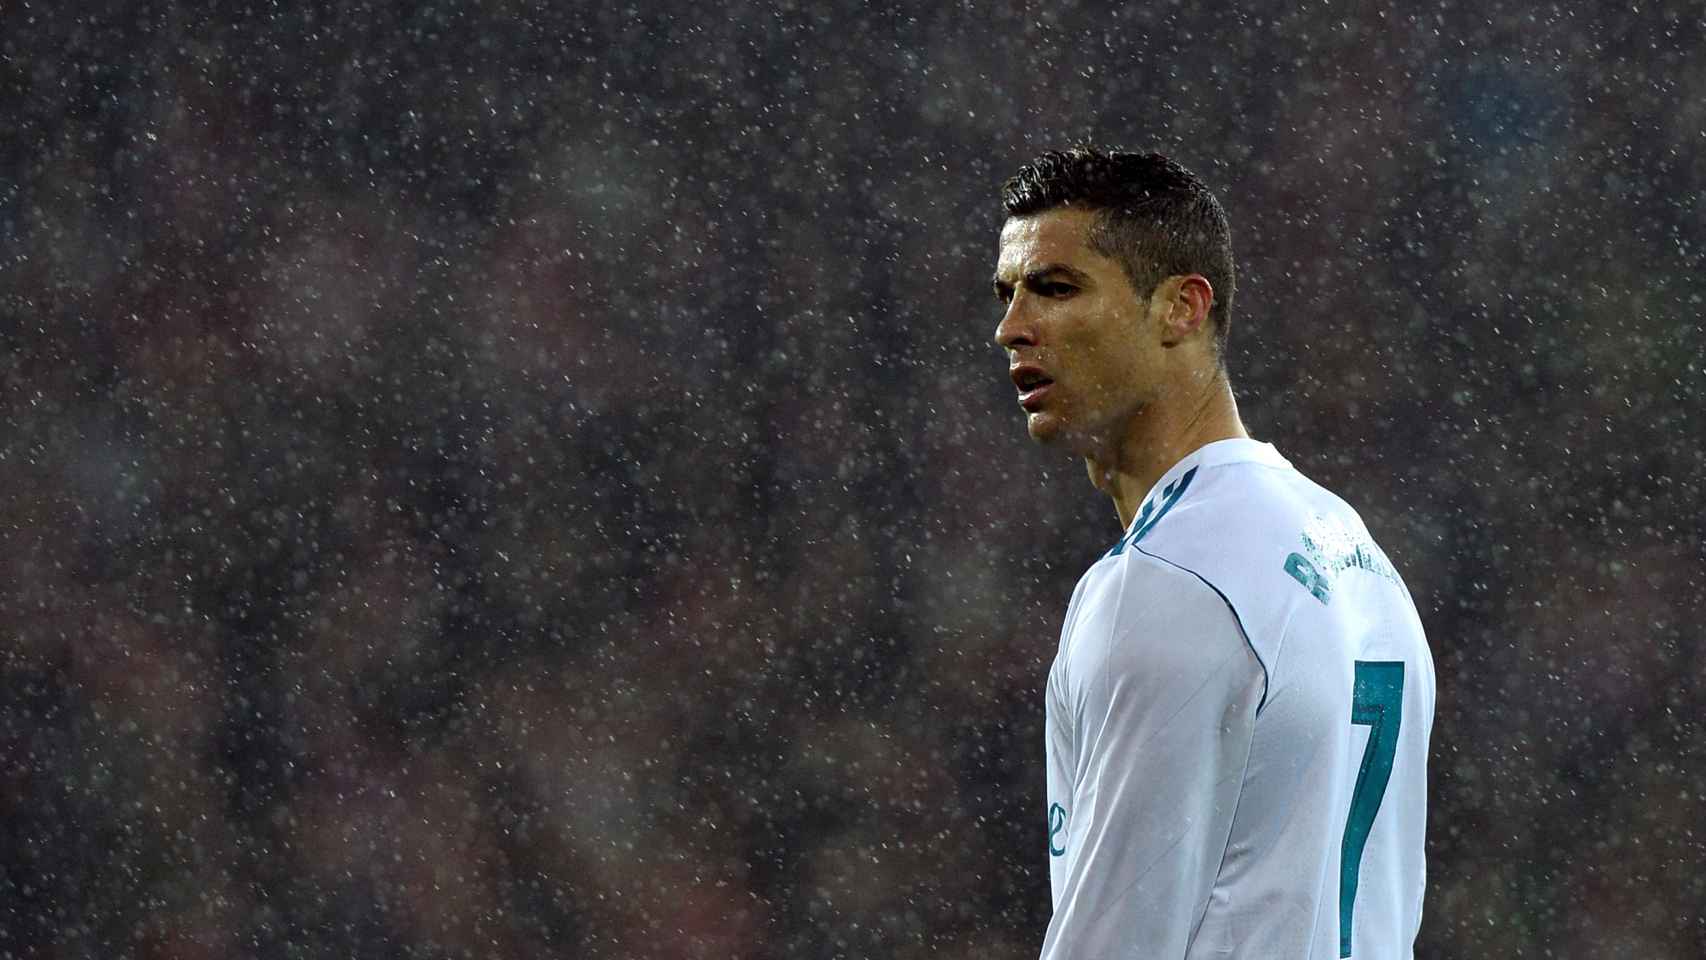 Cristiano Ronaldo tras el empate en San Mamés.